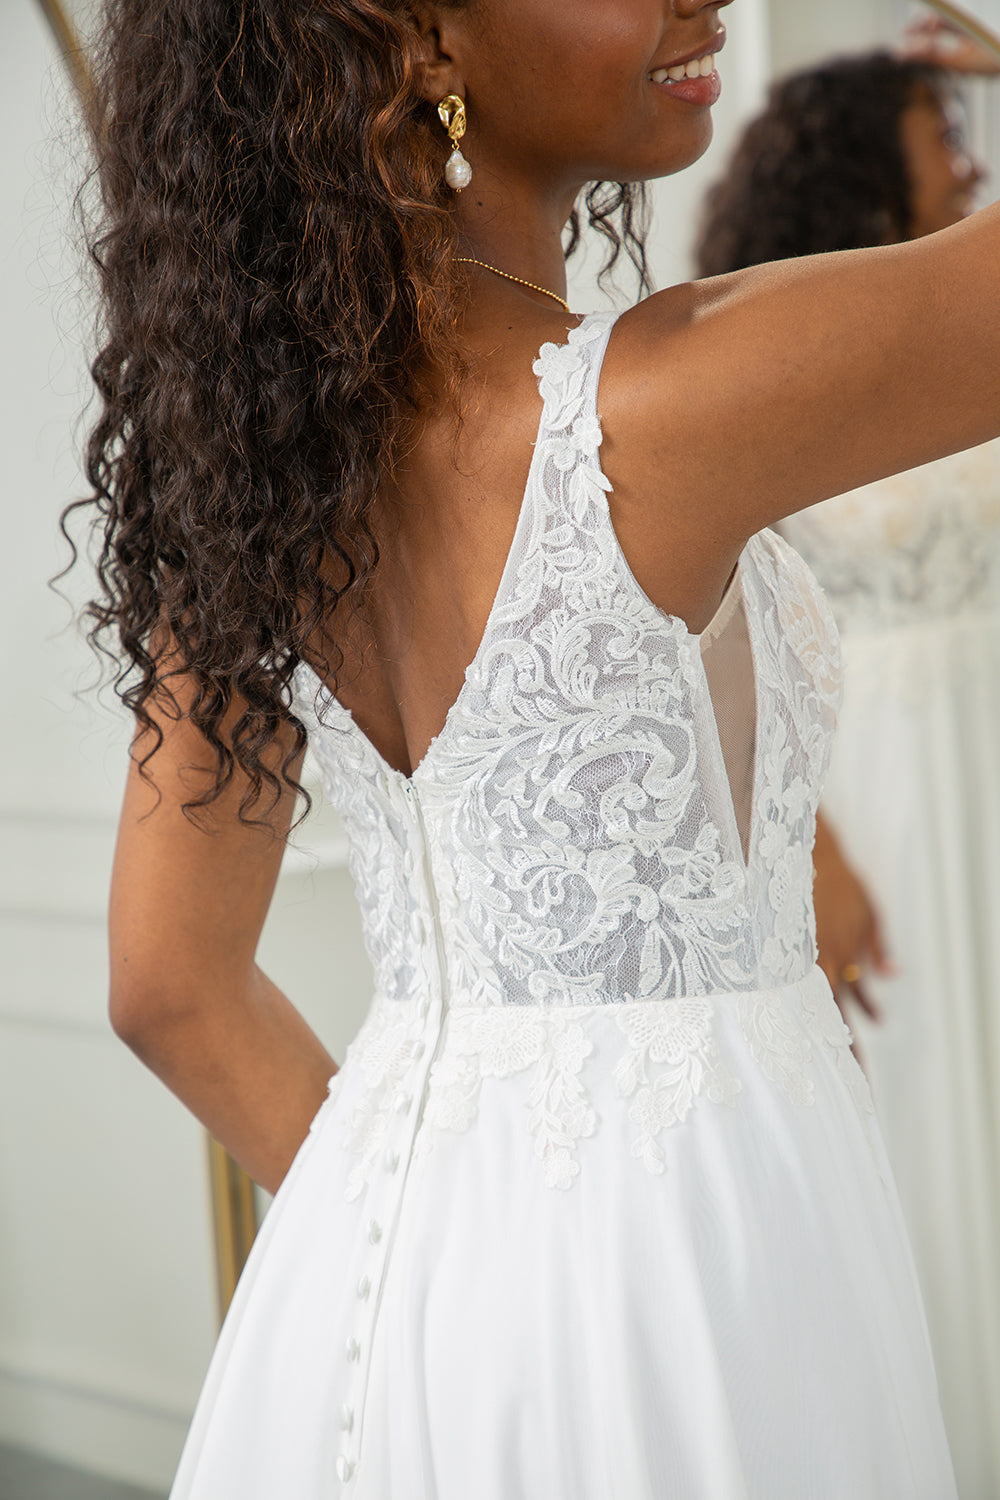 Ivory A Line Square Neck Corset Long Chiffon Lace Wedding Dress With Slit